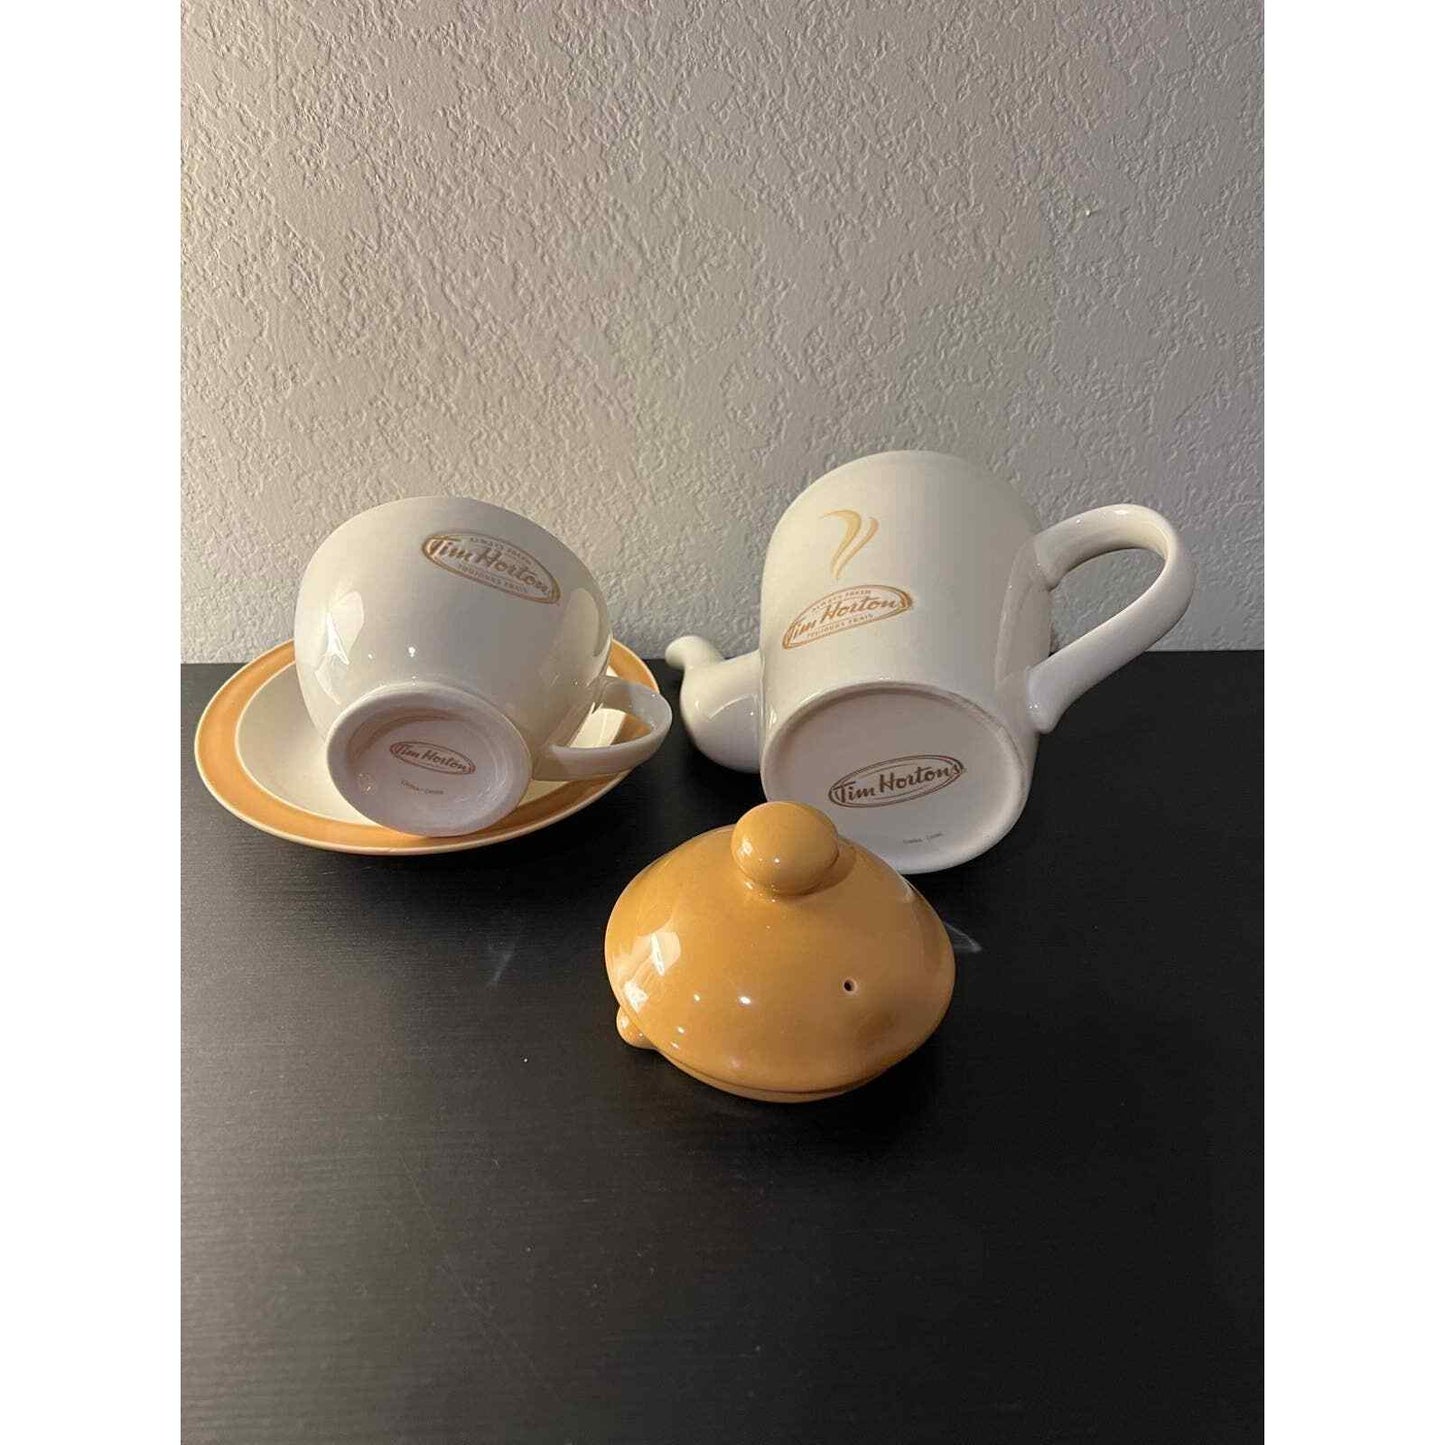 Tim Horton Coffee Pot & Coffee Cup Mug Yellow Drinkware Canada Porcelan